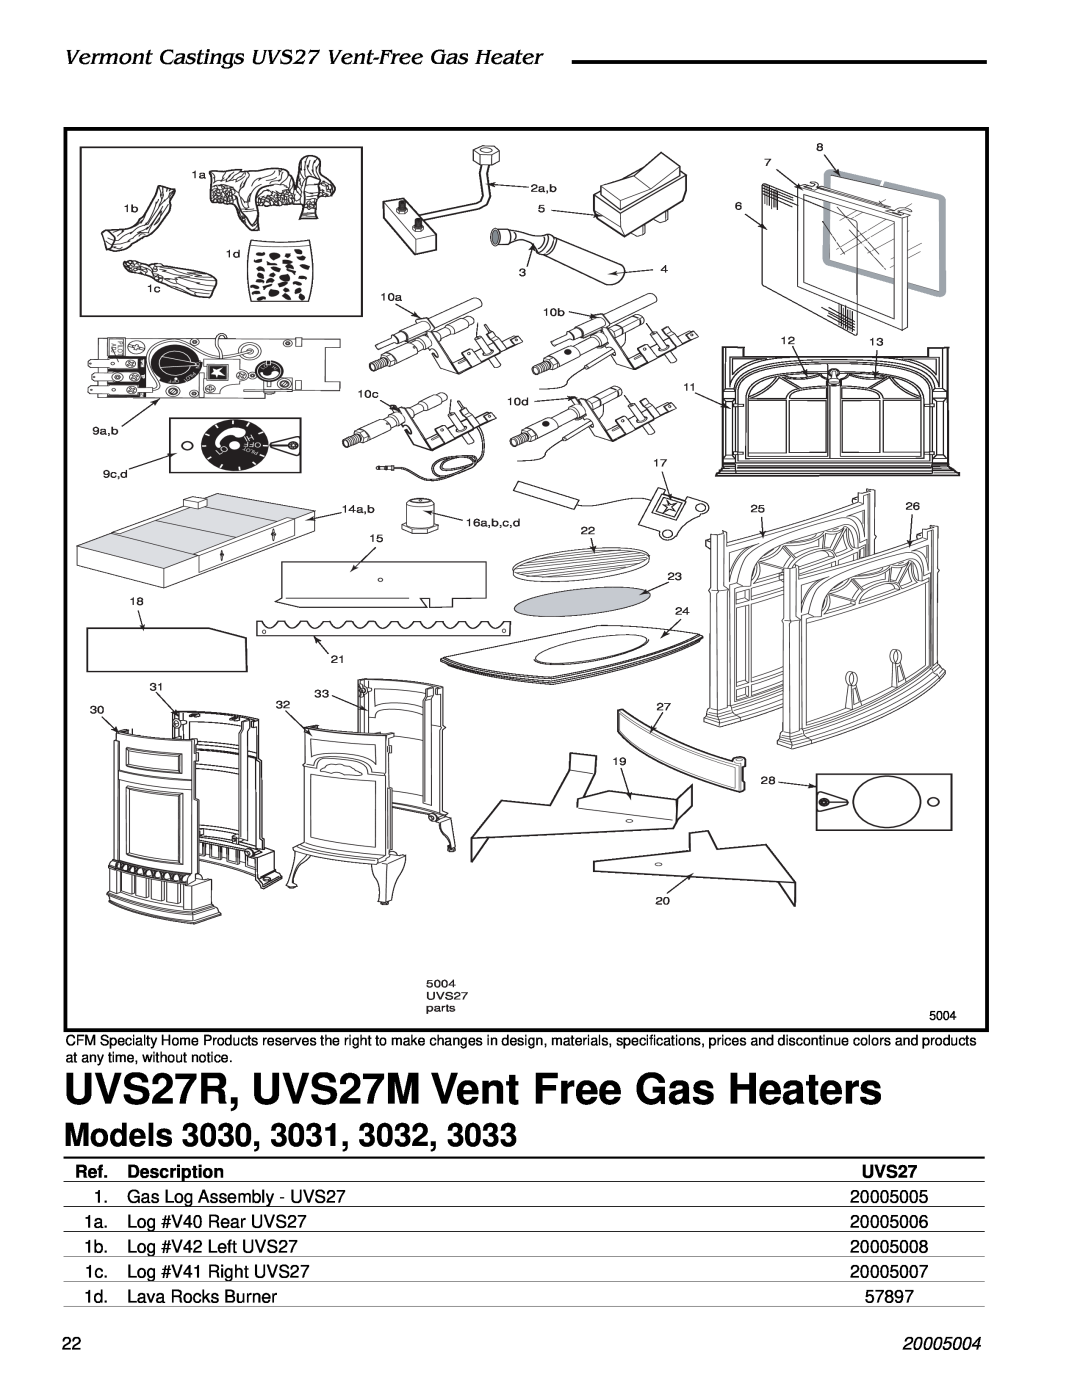 Vermont Casting 3031 Models, UVS27R, UVS27M Vent Free Gas Heaters, Vermont Castings UVS27 Vent-FreeGas Heater, 20005004 